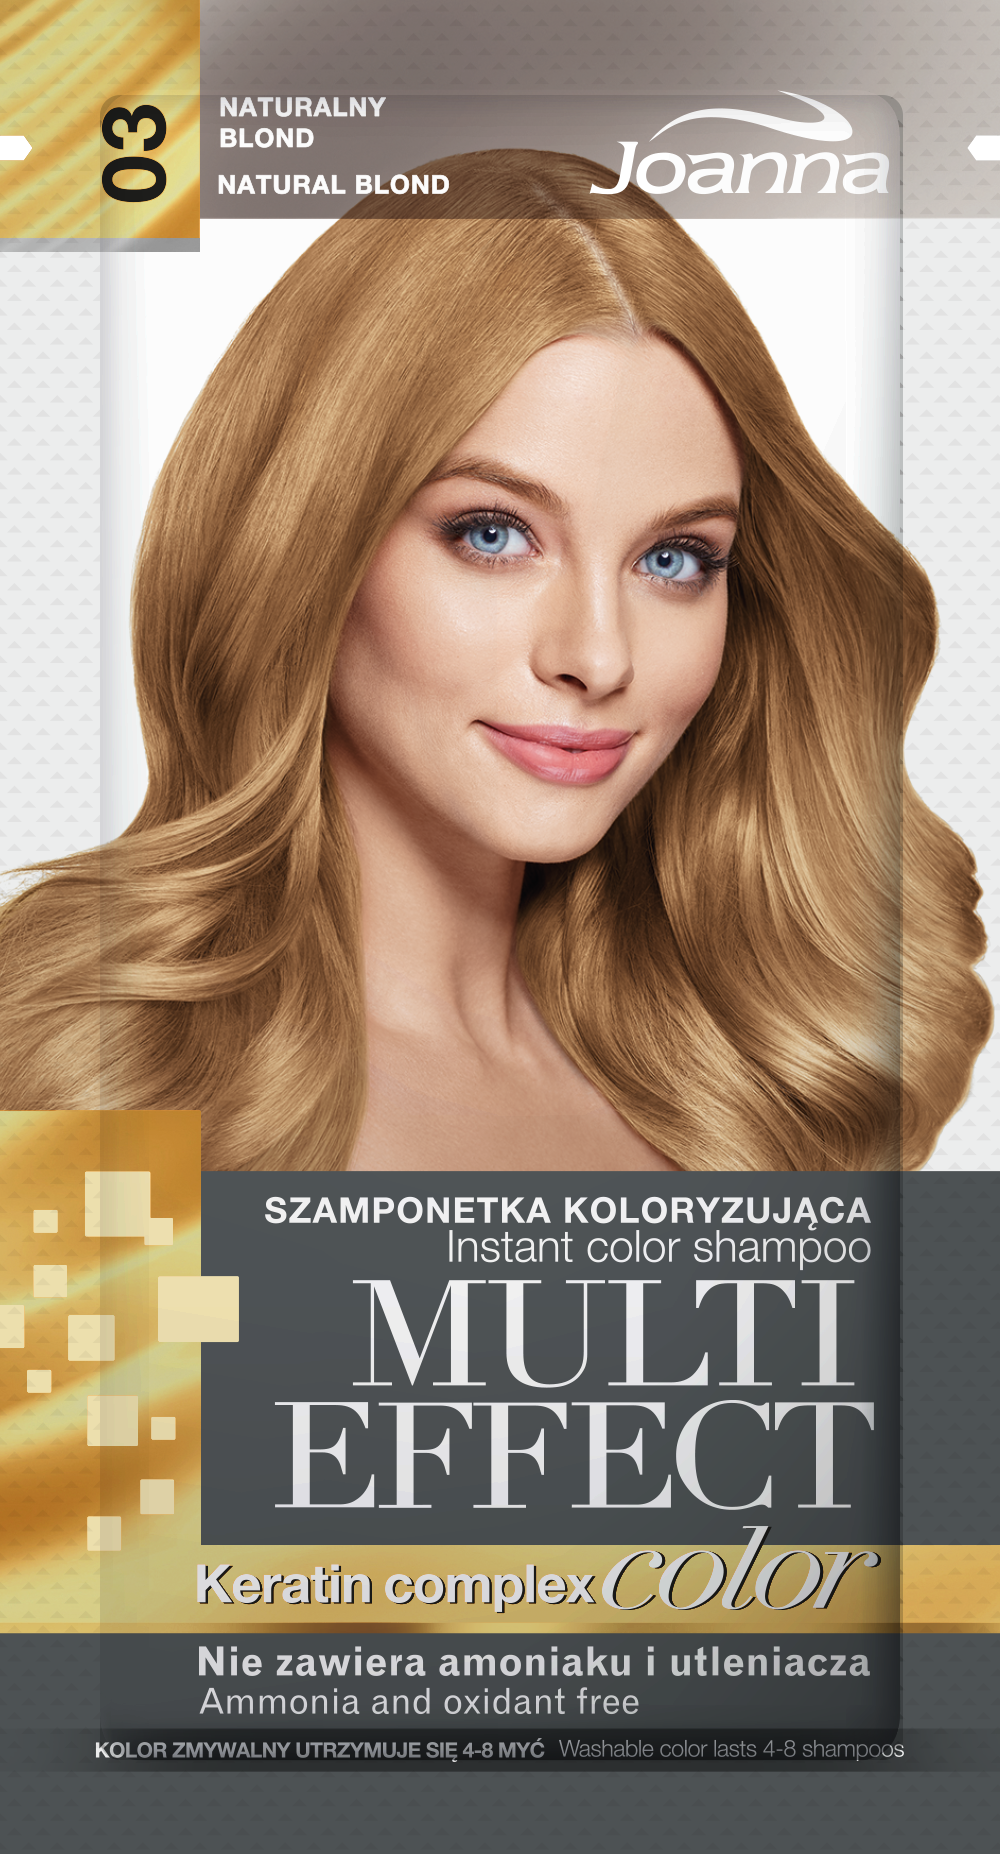 Joanna Multi Effect Szamponetka Koloryzująca 03 Naturalny Blond, 30g